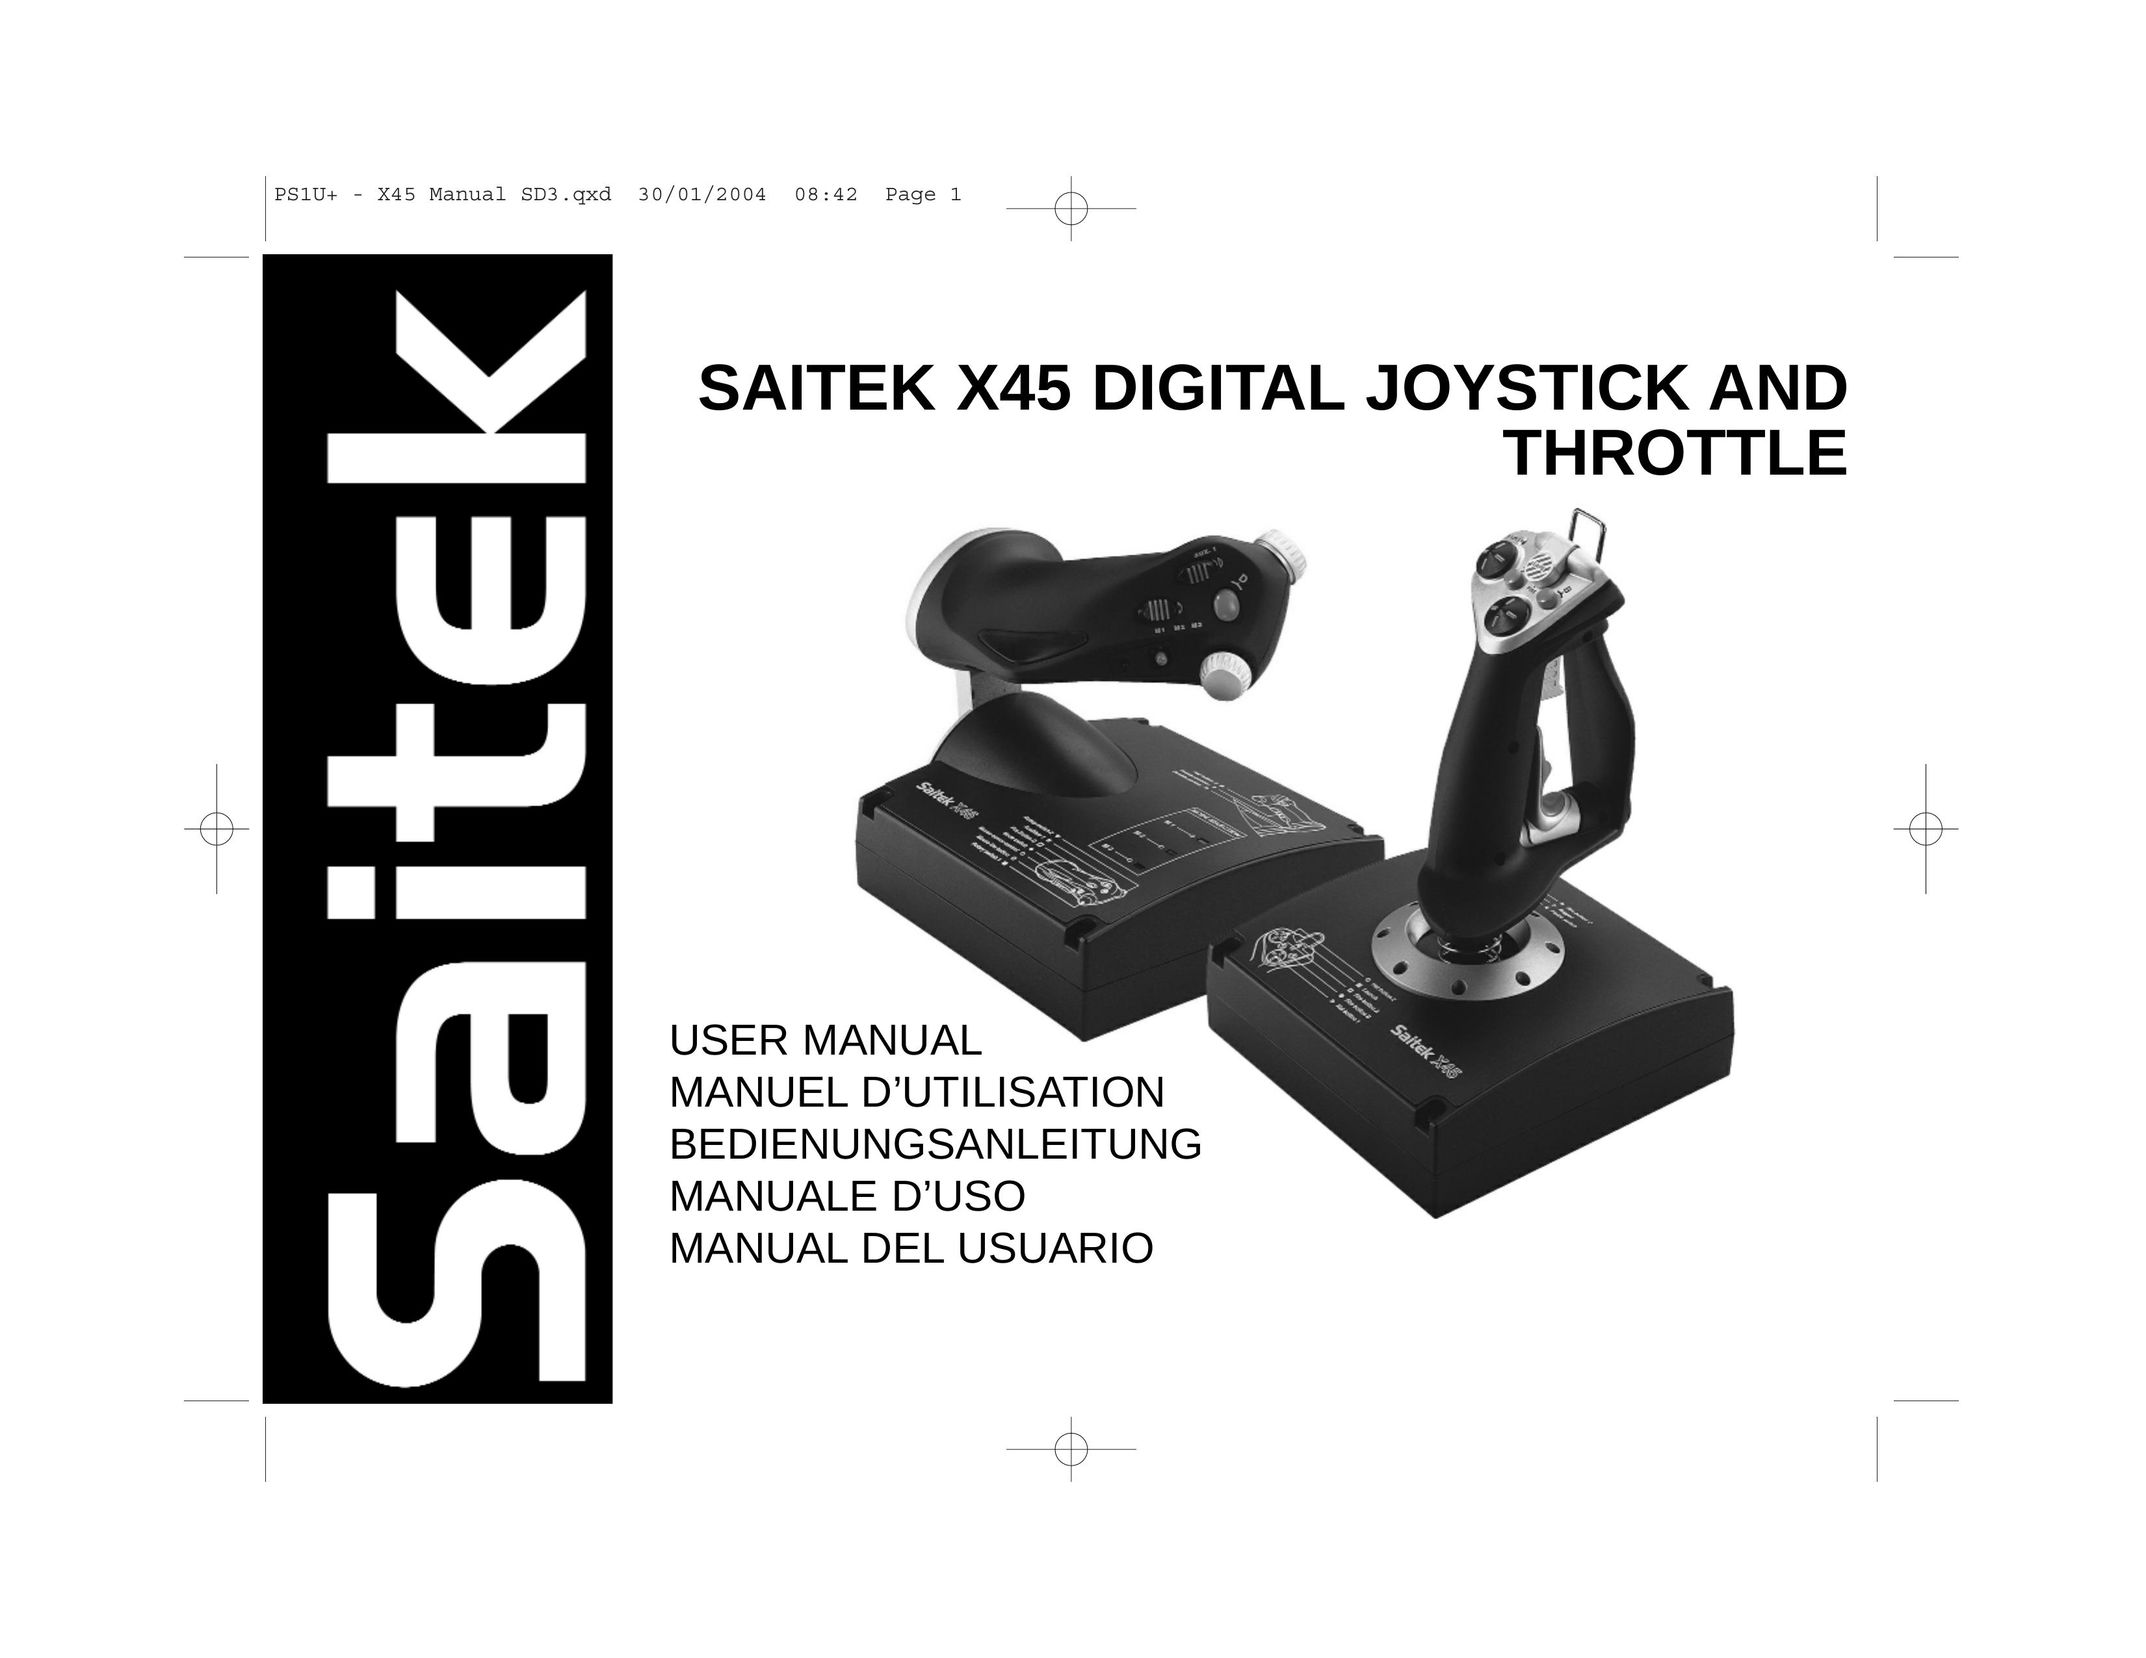 Saitek X45 Games User Manual